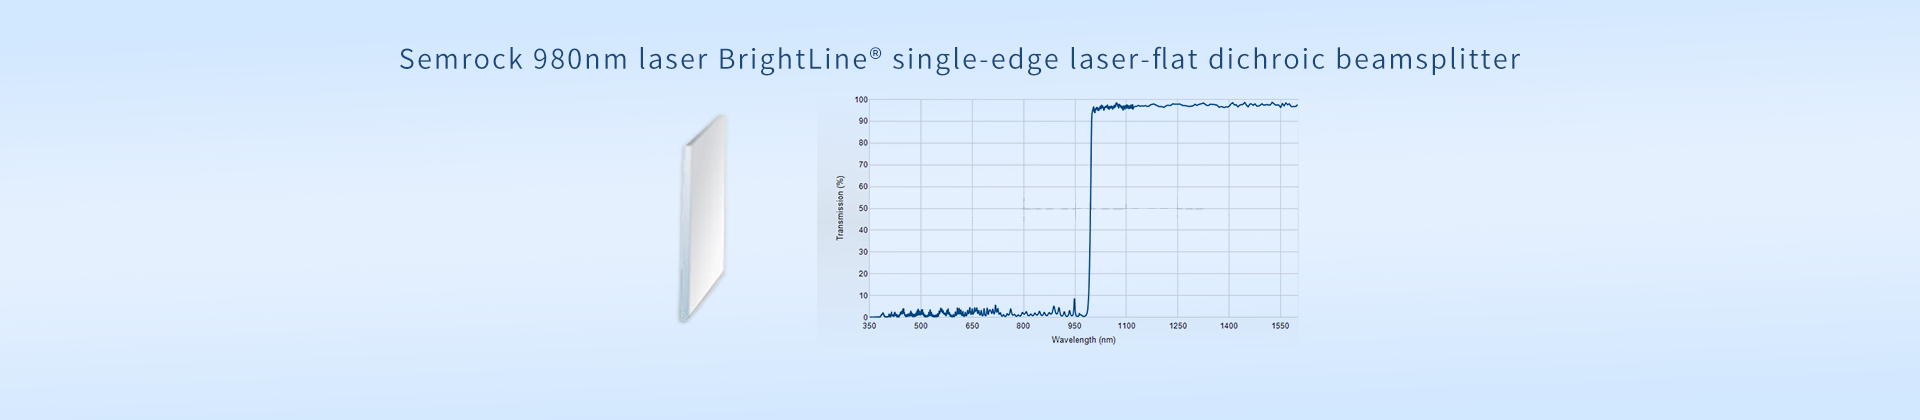 Semrock 980nm laser BrightLine® single-edge laser-flat dichroic beamsplitter